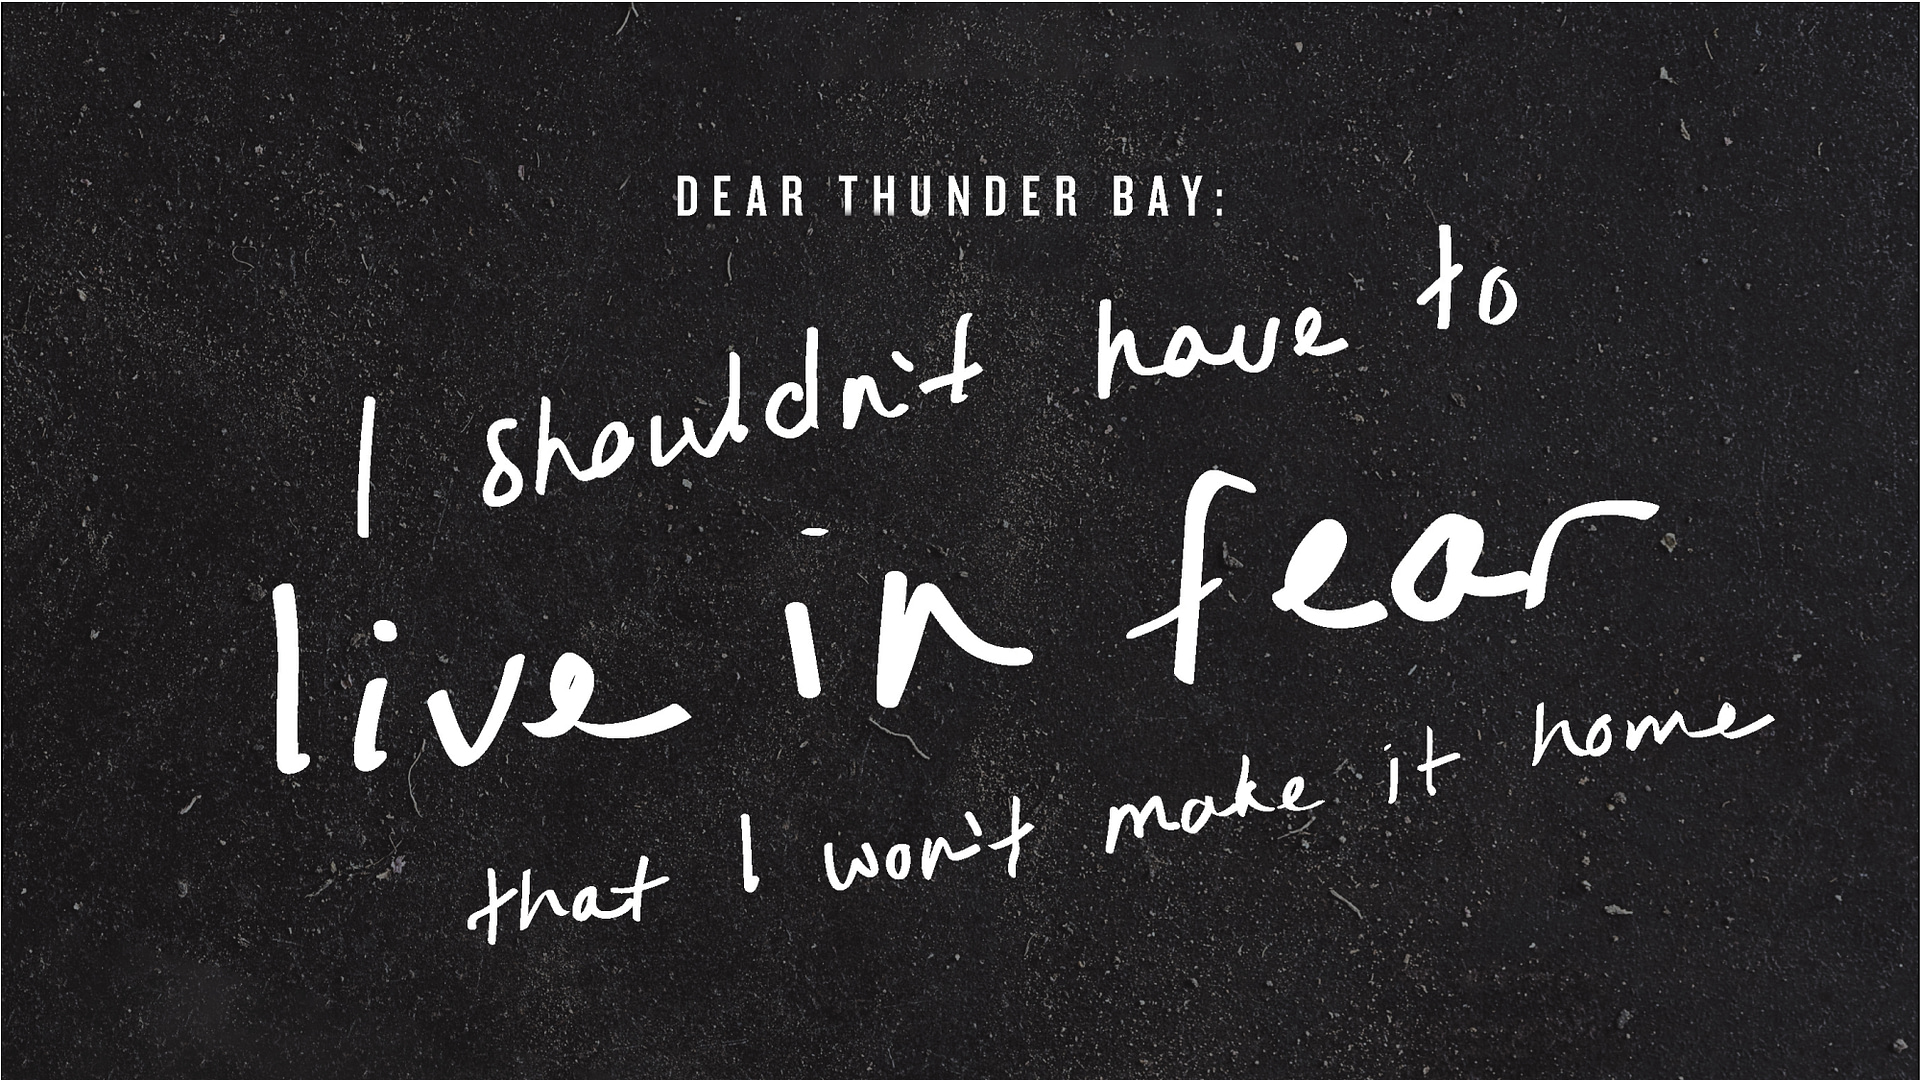 Dear Thunder Bay